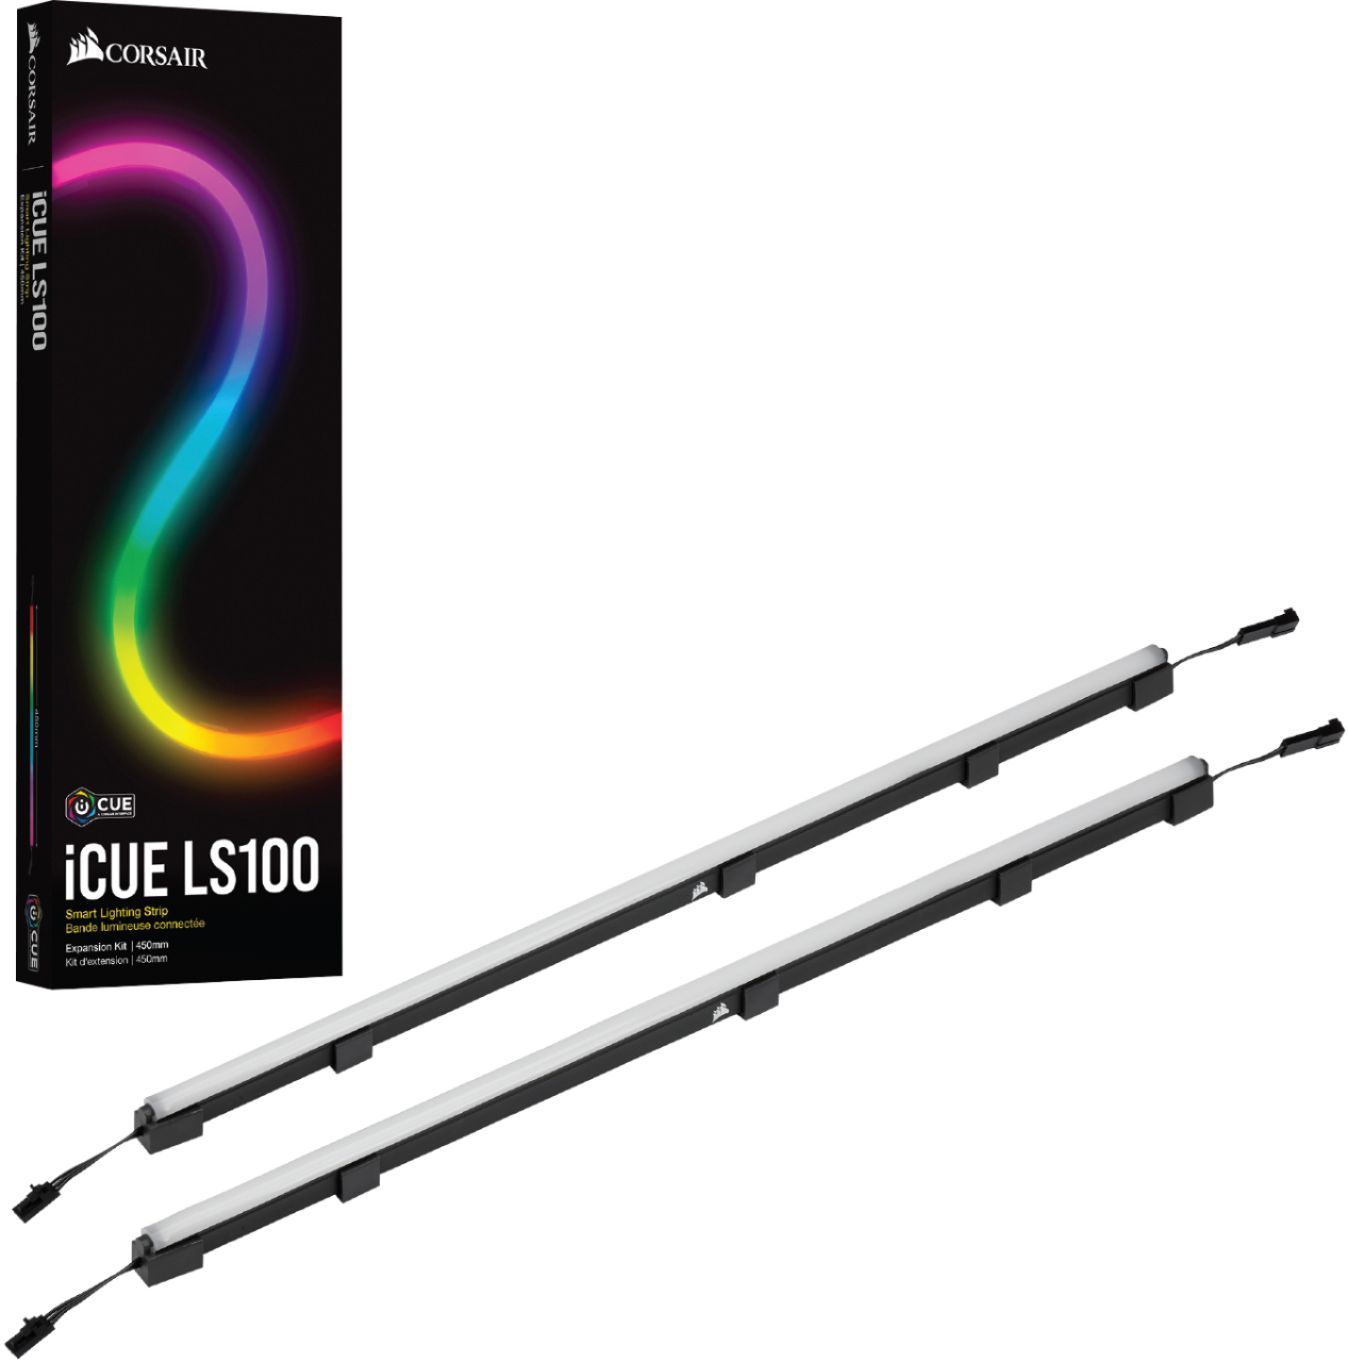 Corsair iCUE LS100 LED Smart Lighting Strip Expansion Kit 450mm - Store 974 | ستور ٩٧٤